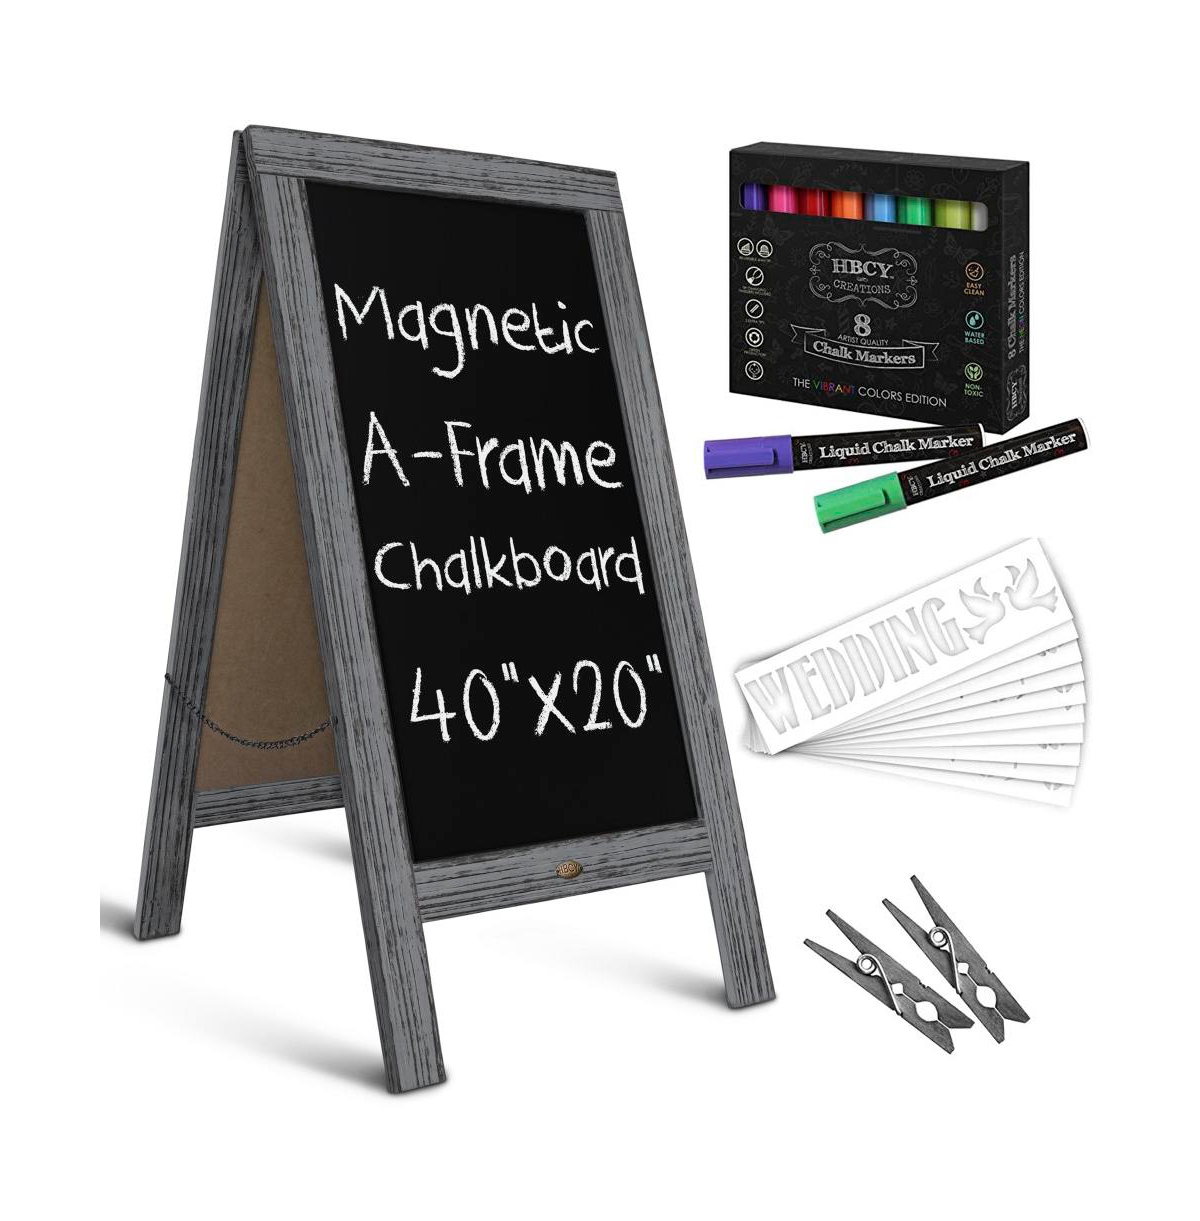 A-Frame Chalkboard / Sidewalk Chalkboard Sign / Large Sturdy Sandwich Board / A Frame Restaurant Message Board - Gray wash